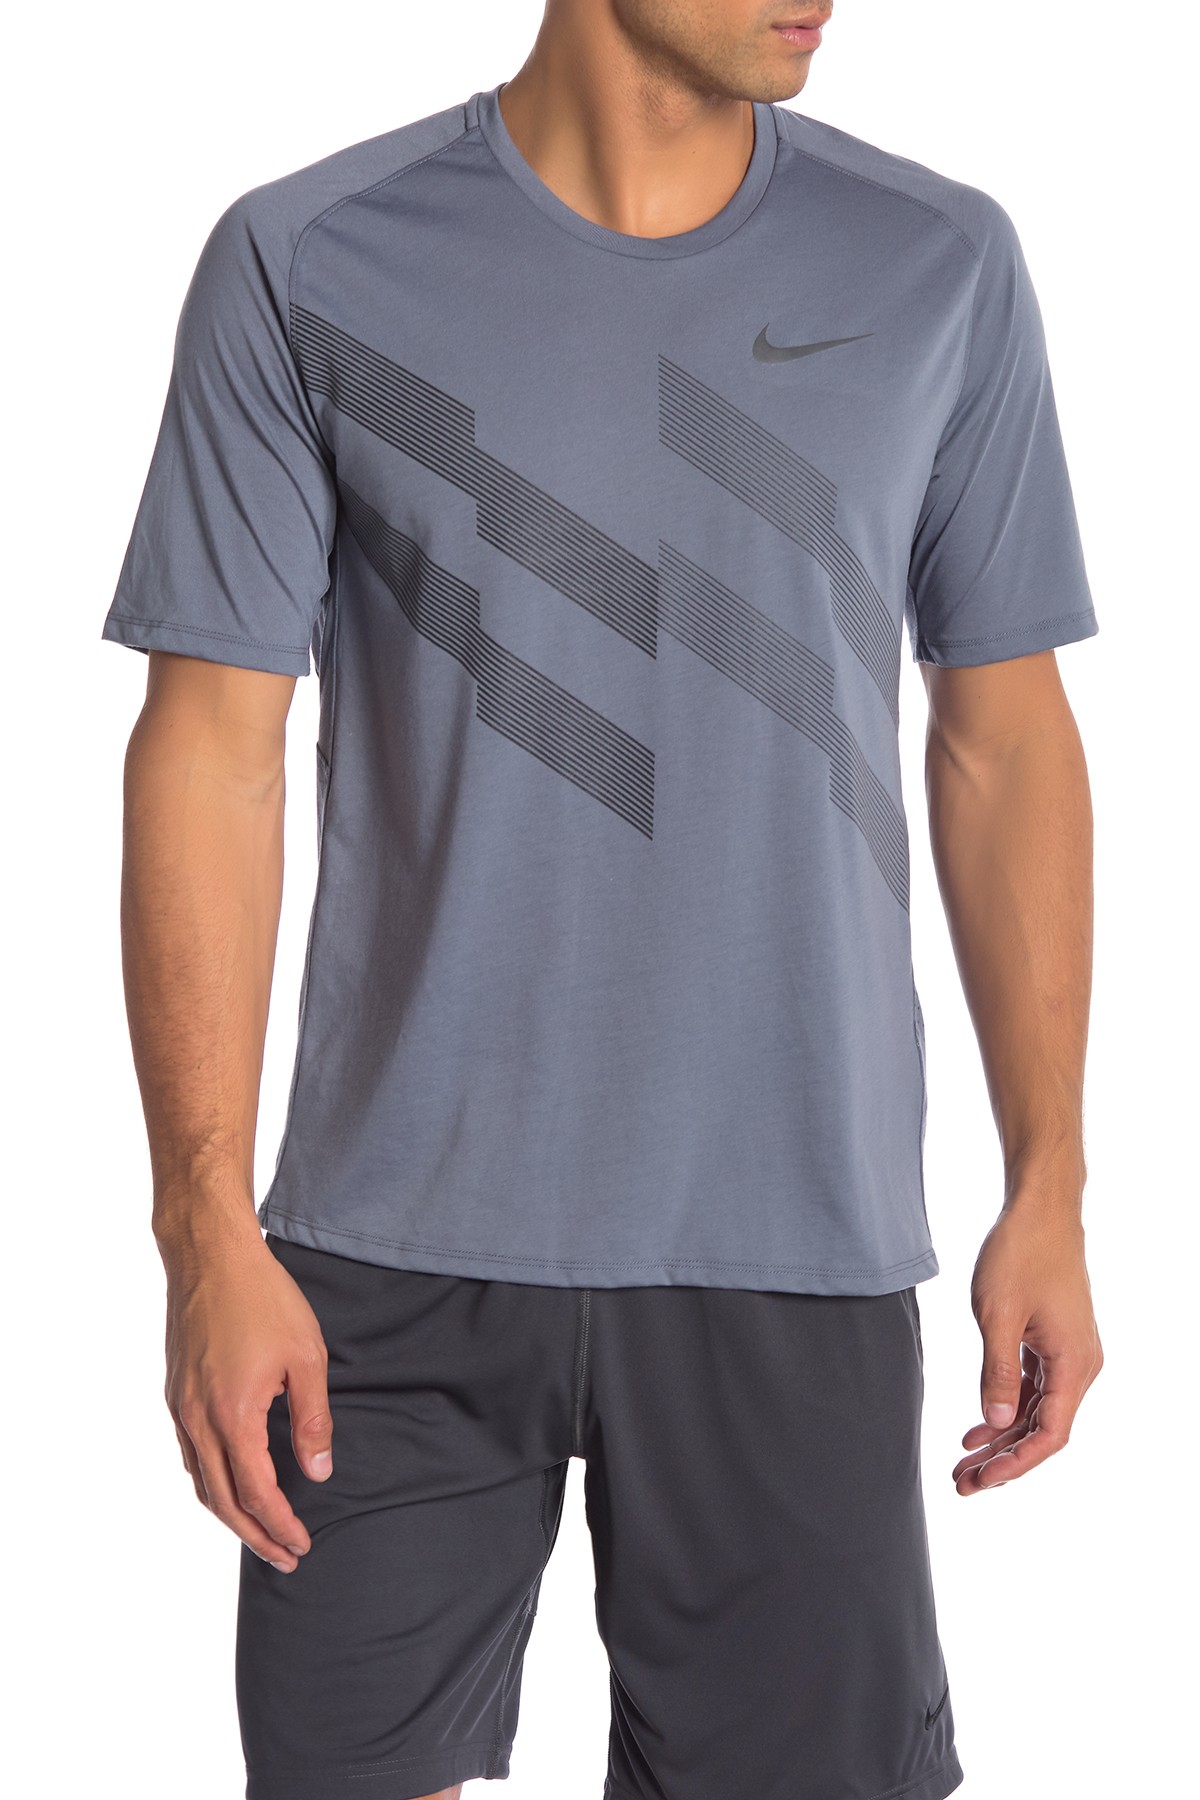 Nike Men's Dri-Fit Running Stripe Graphic Top (Stone Blue, Small ...